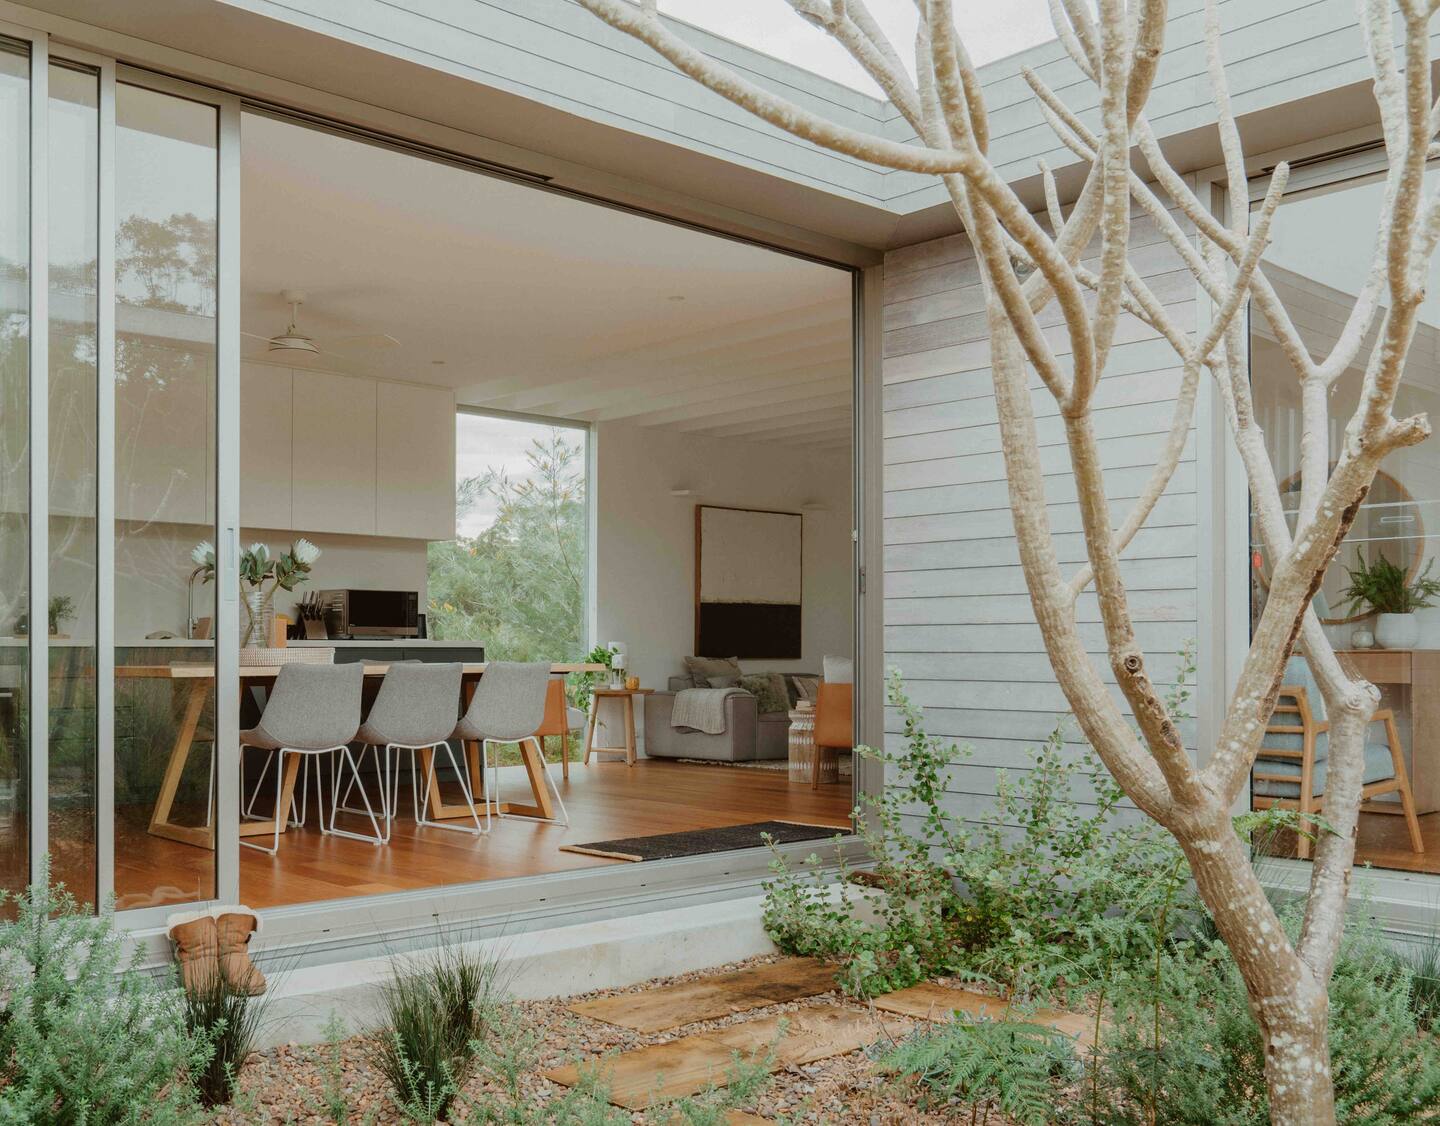 A prefabricated off-grid tree house